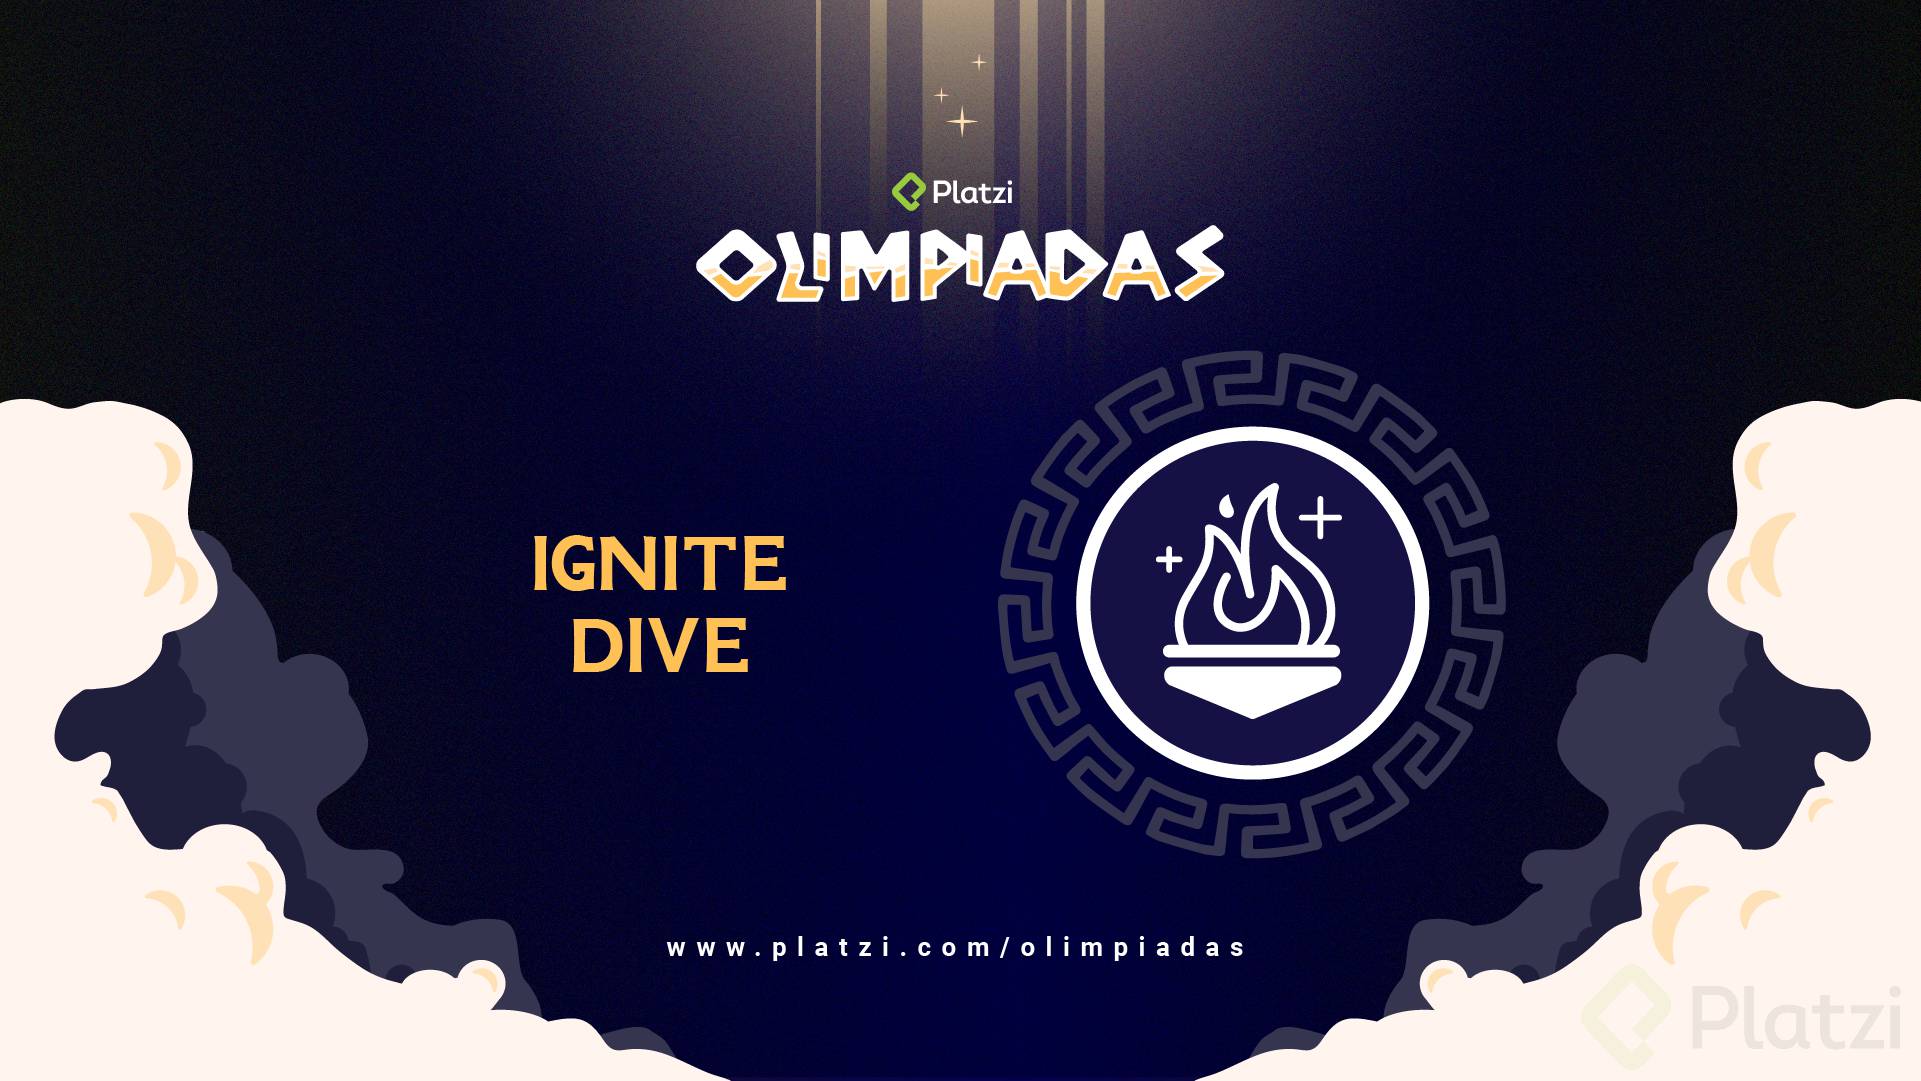 Olimpiadas_Ignite_Dive_Wallpaper (1).png